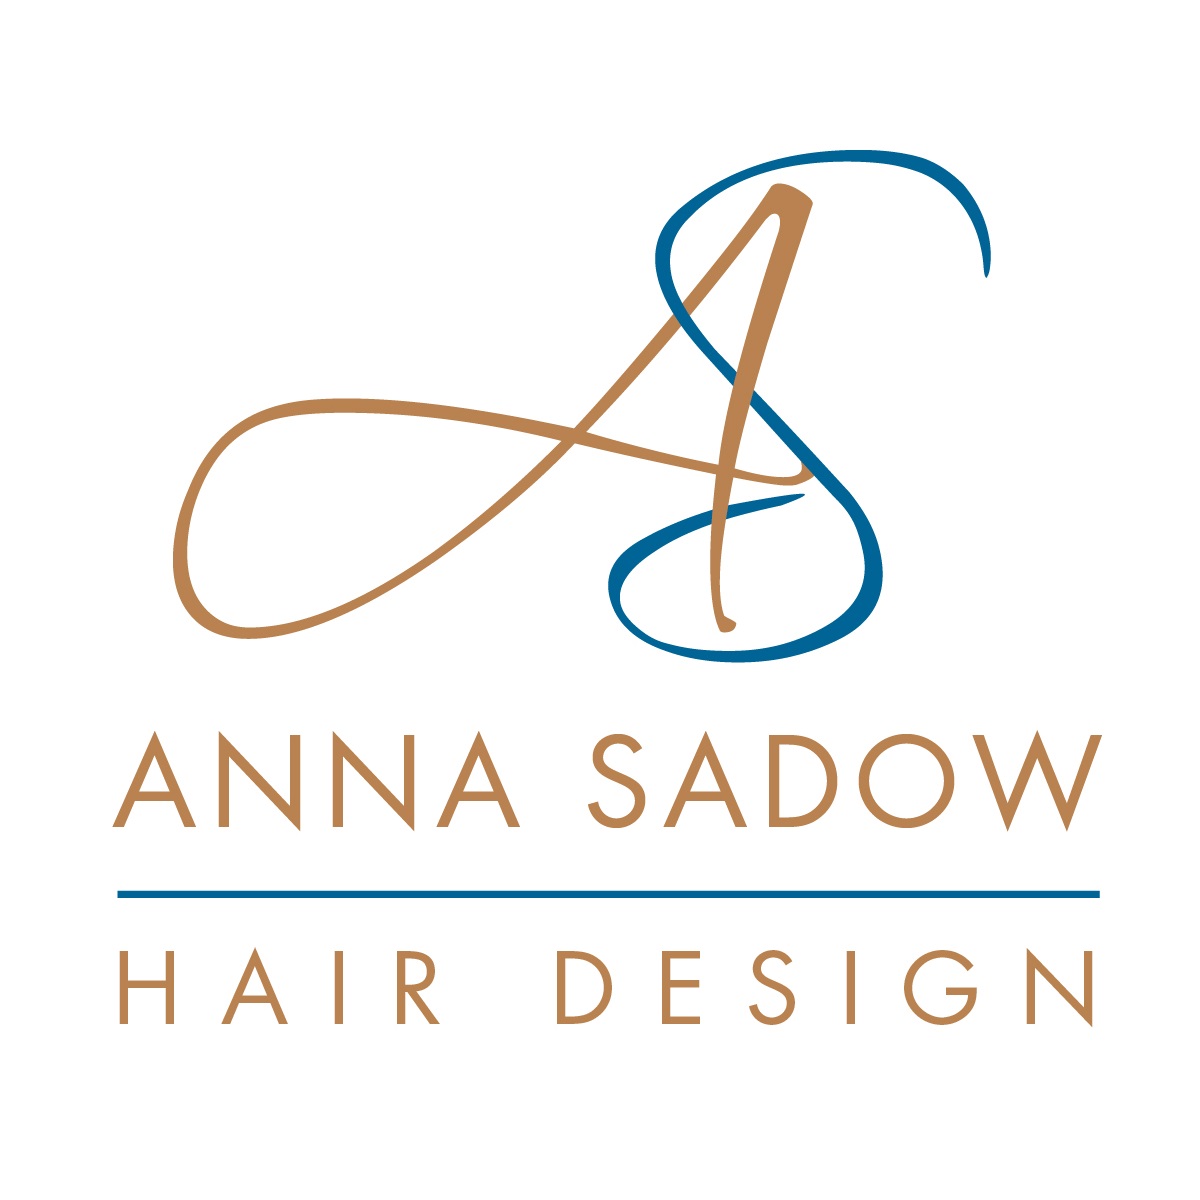 Anna Sadow Hair Design